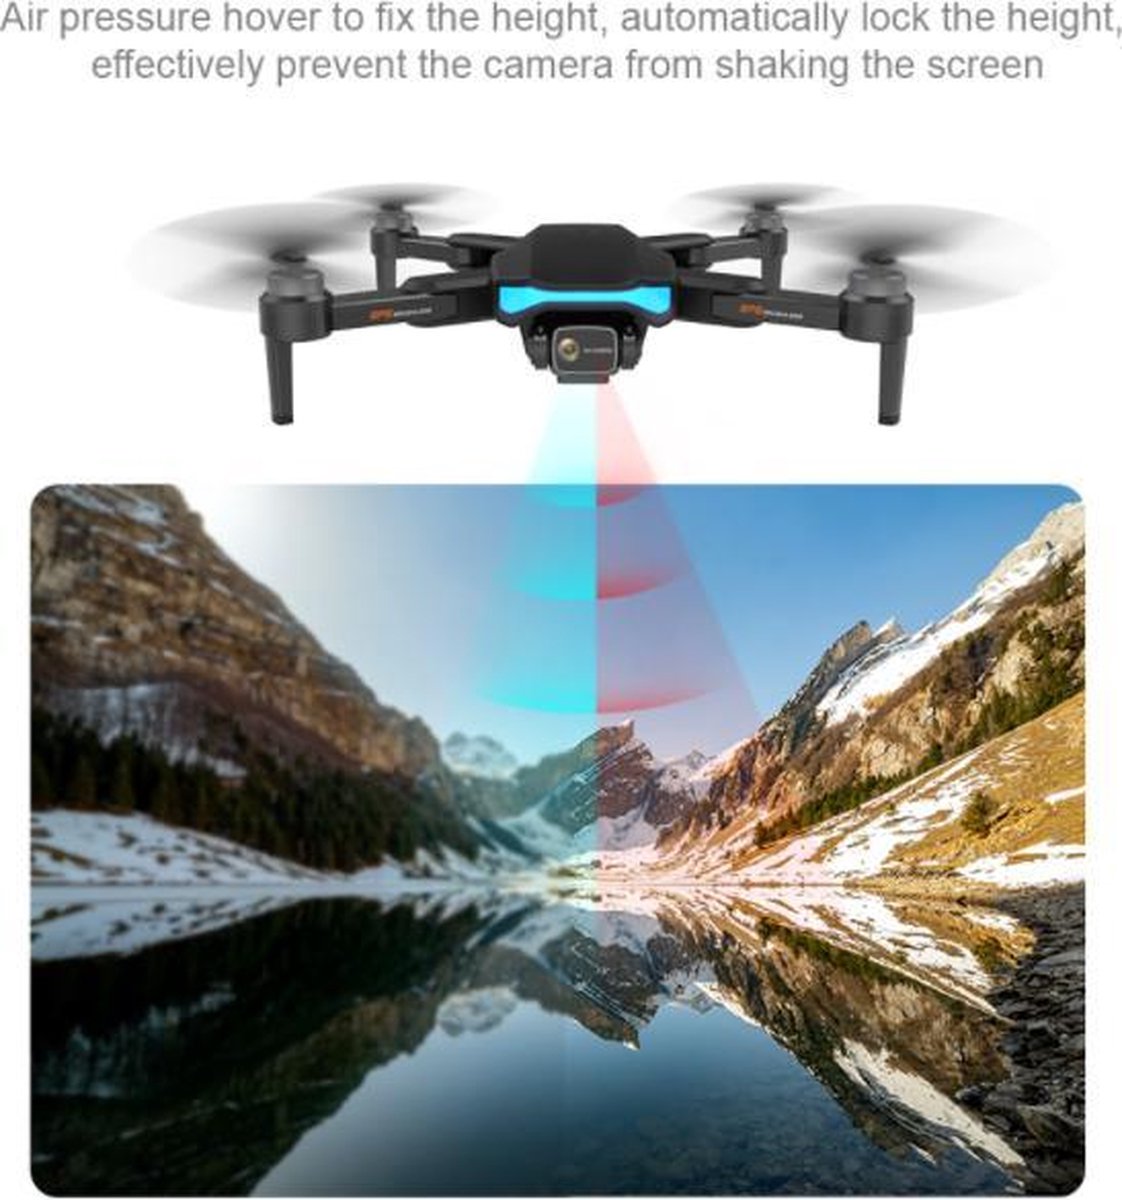 ZFR 188 semi-professionele drone met Full HD camera - 28 minuten vliegtijd - GPS & 5GHz datatransmissie - 1000m afstandsbediening - Inclusief handige draadtas